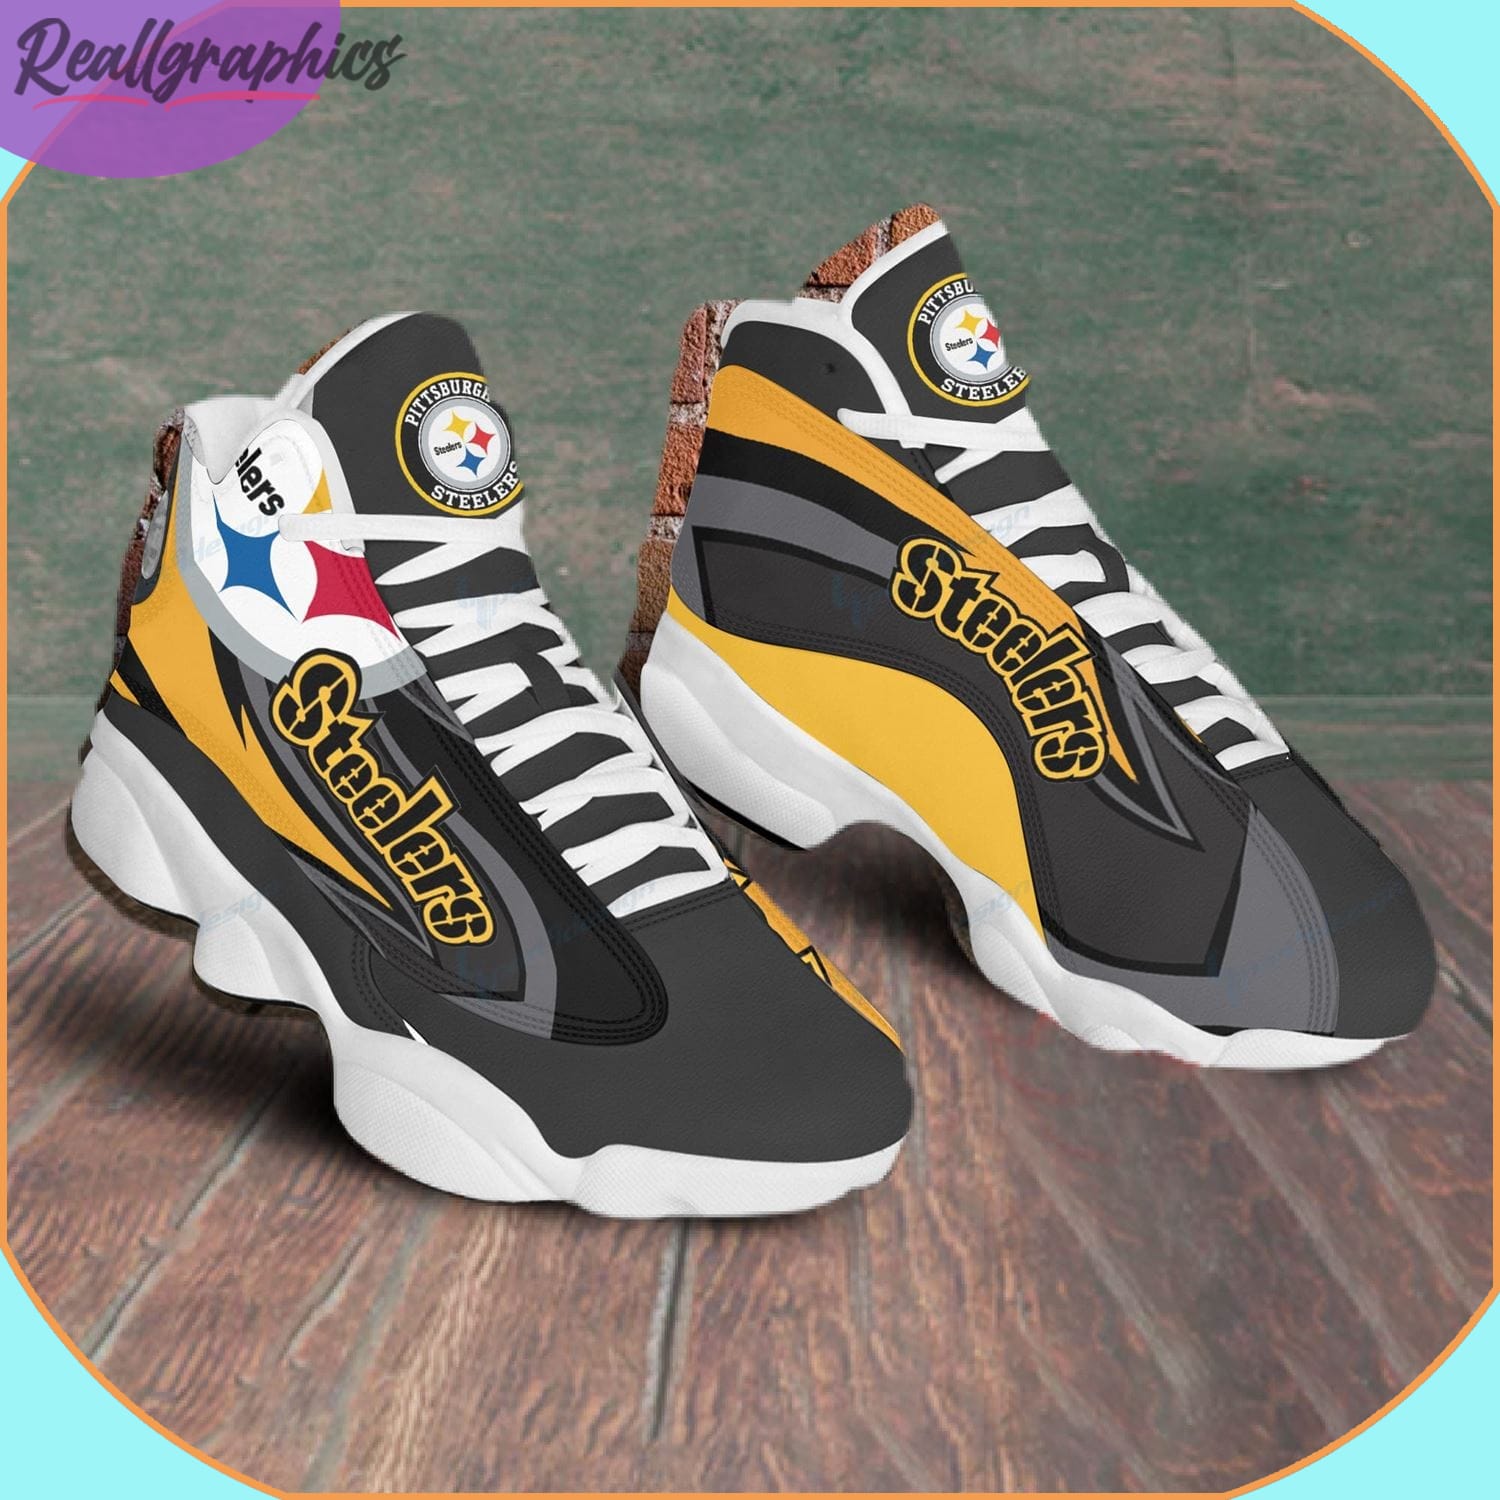 Pittsburgh Steelers AJordan 13 Sneakers,Pittsburgh Steelers Gifts for Fans